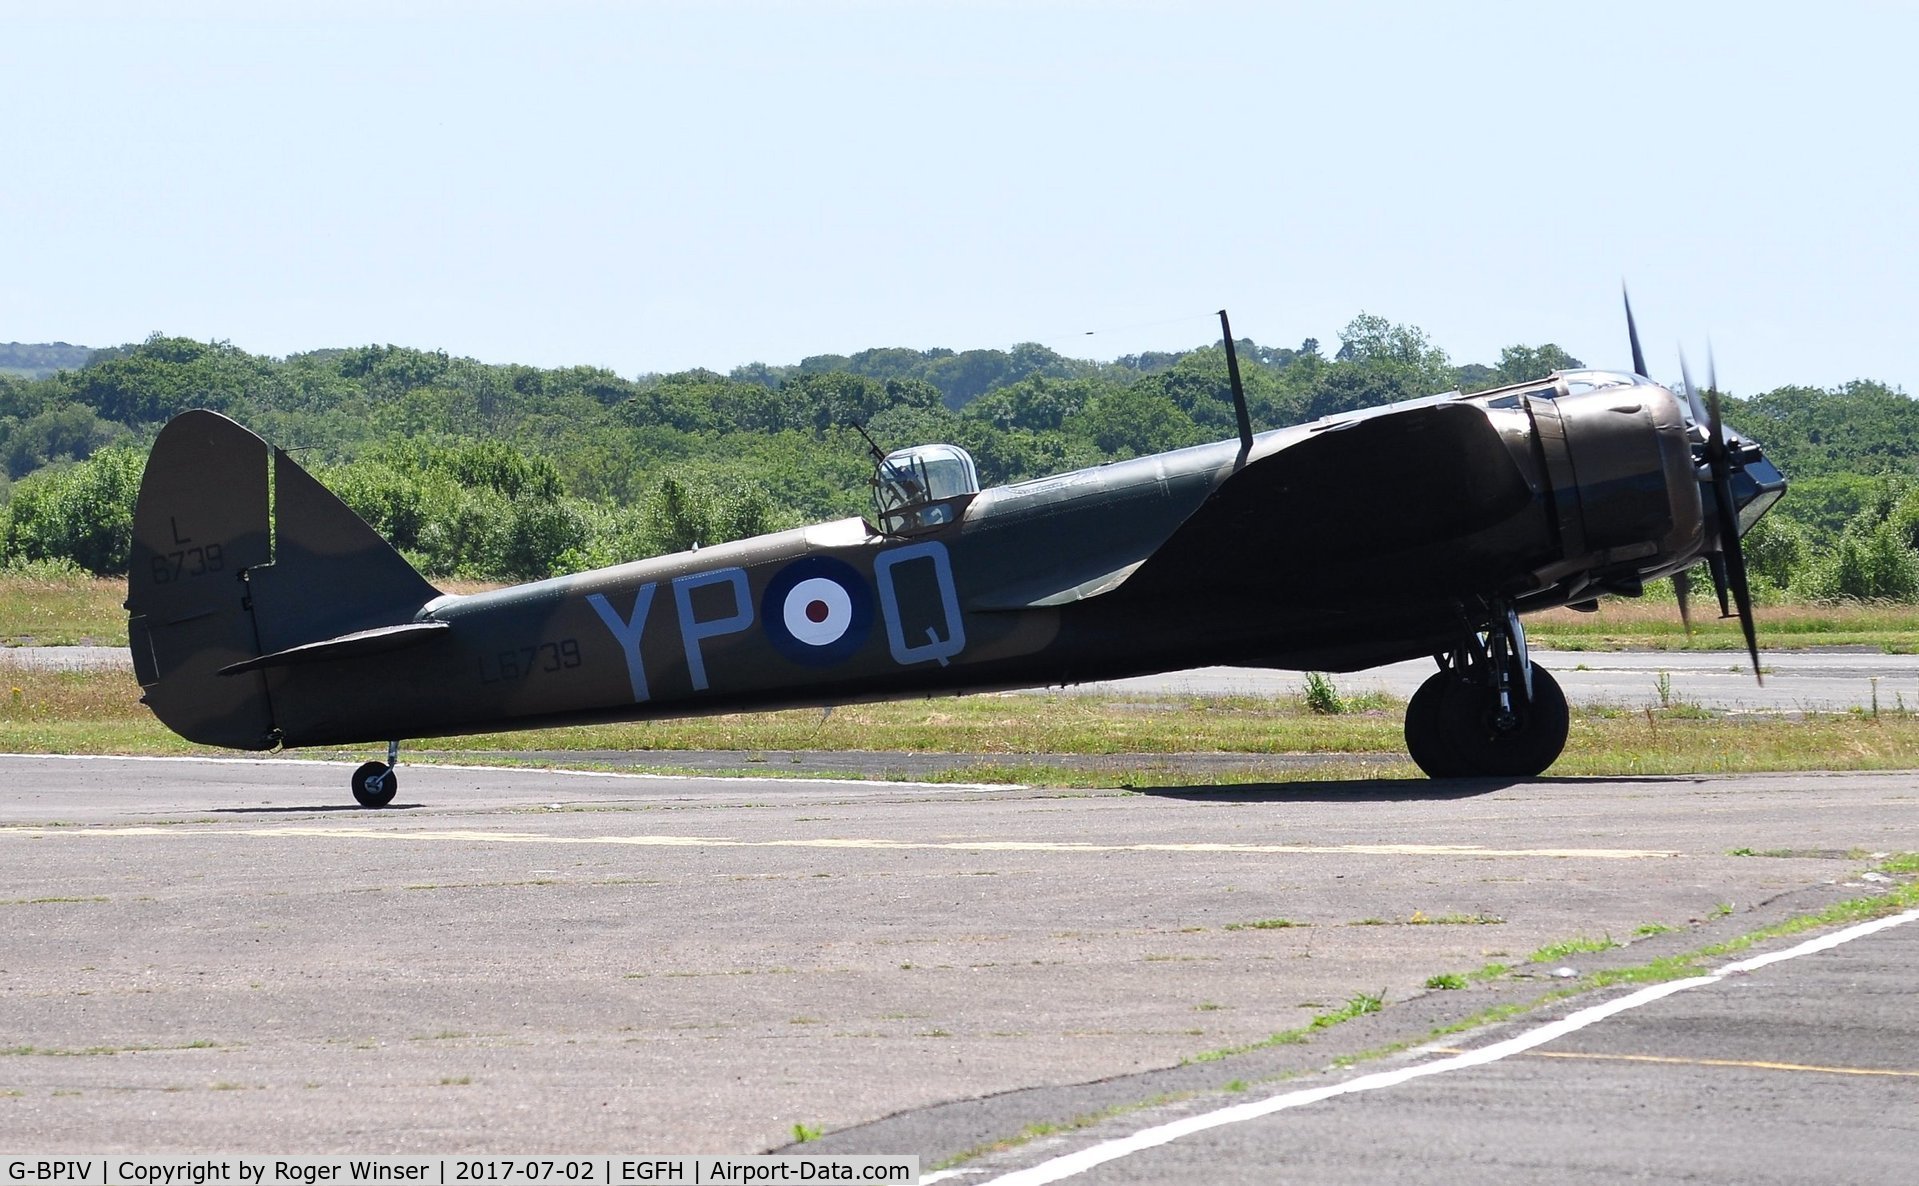 G-BPIV, 1943 Bristol 149 Bolingbroke Mk.IVT C/N 10201, In the markings of Bristol Blenheim 1f aircraft L6739 coded YP-Q of 23 Squadron RAF.